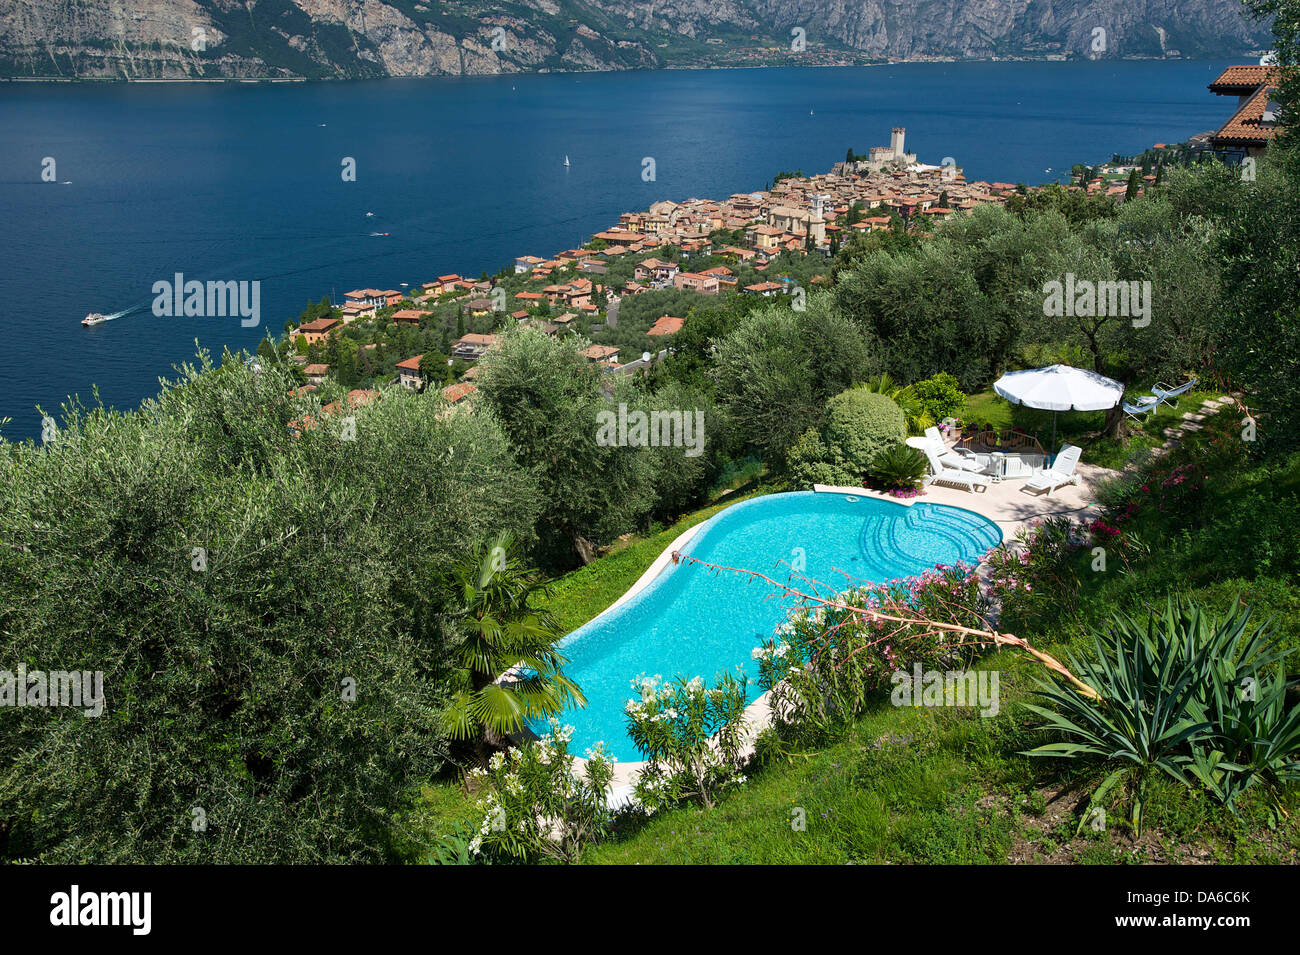 Lake Garda, Italy, Europe, Lago di Garda, Malcesine, town view, hotel pool, pool arrangement, pool, hotel, tourism, Swimming poo Stock Photo